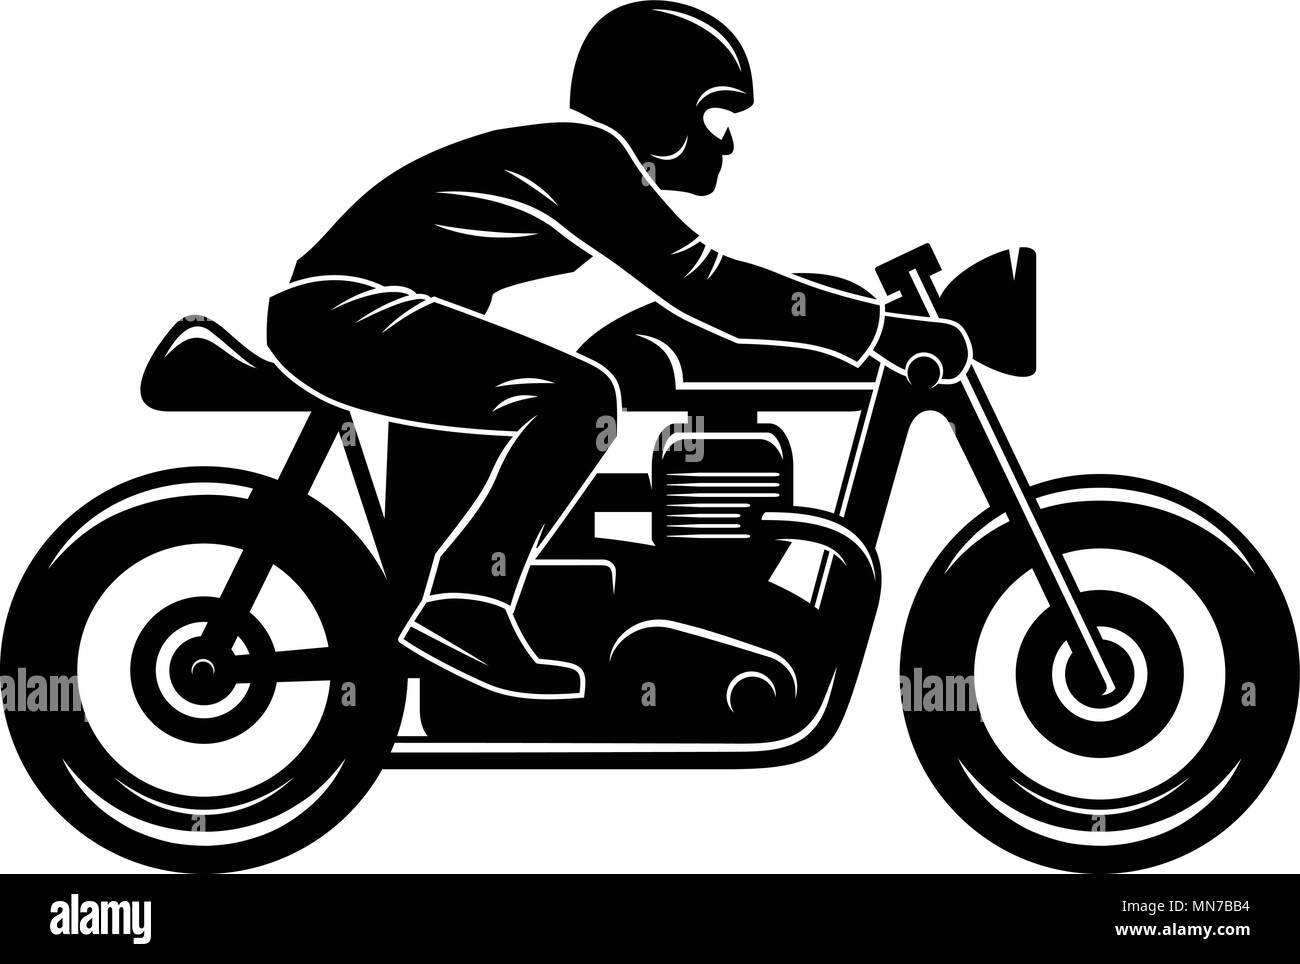 Café Racer Silhouette auf Weiß/Motorradfahrer/Vintage t-shirt Graphic Design/Tee graphics Stock Vektor